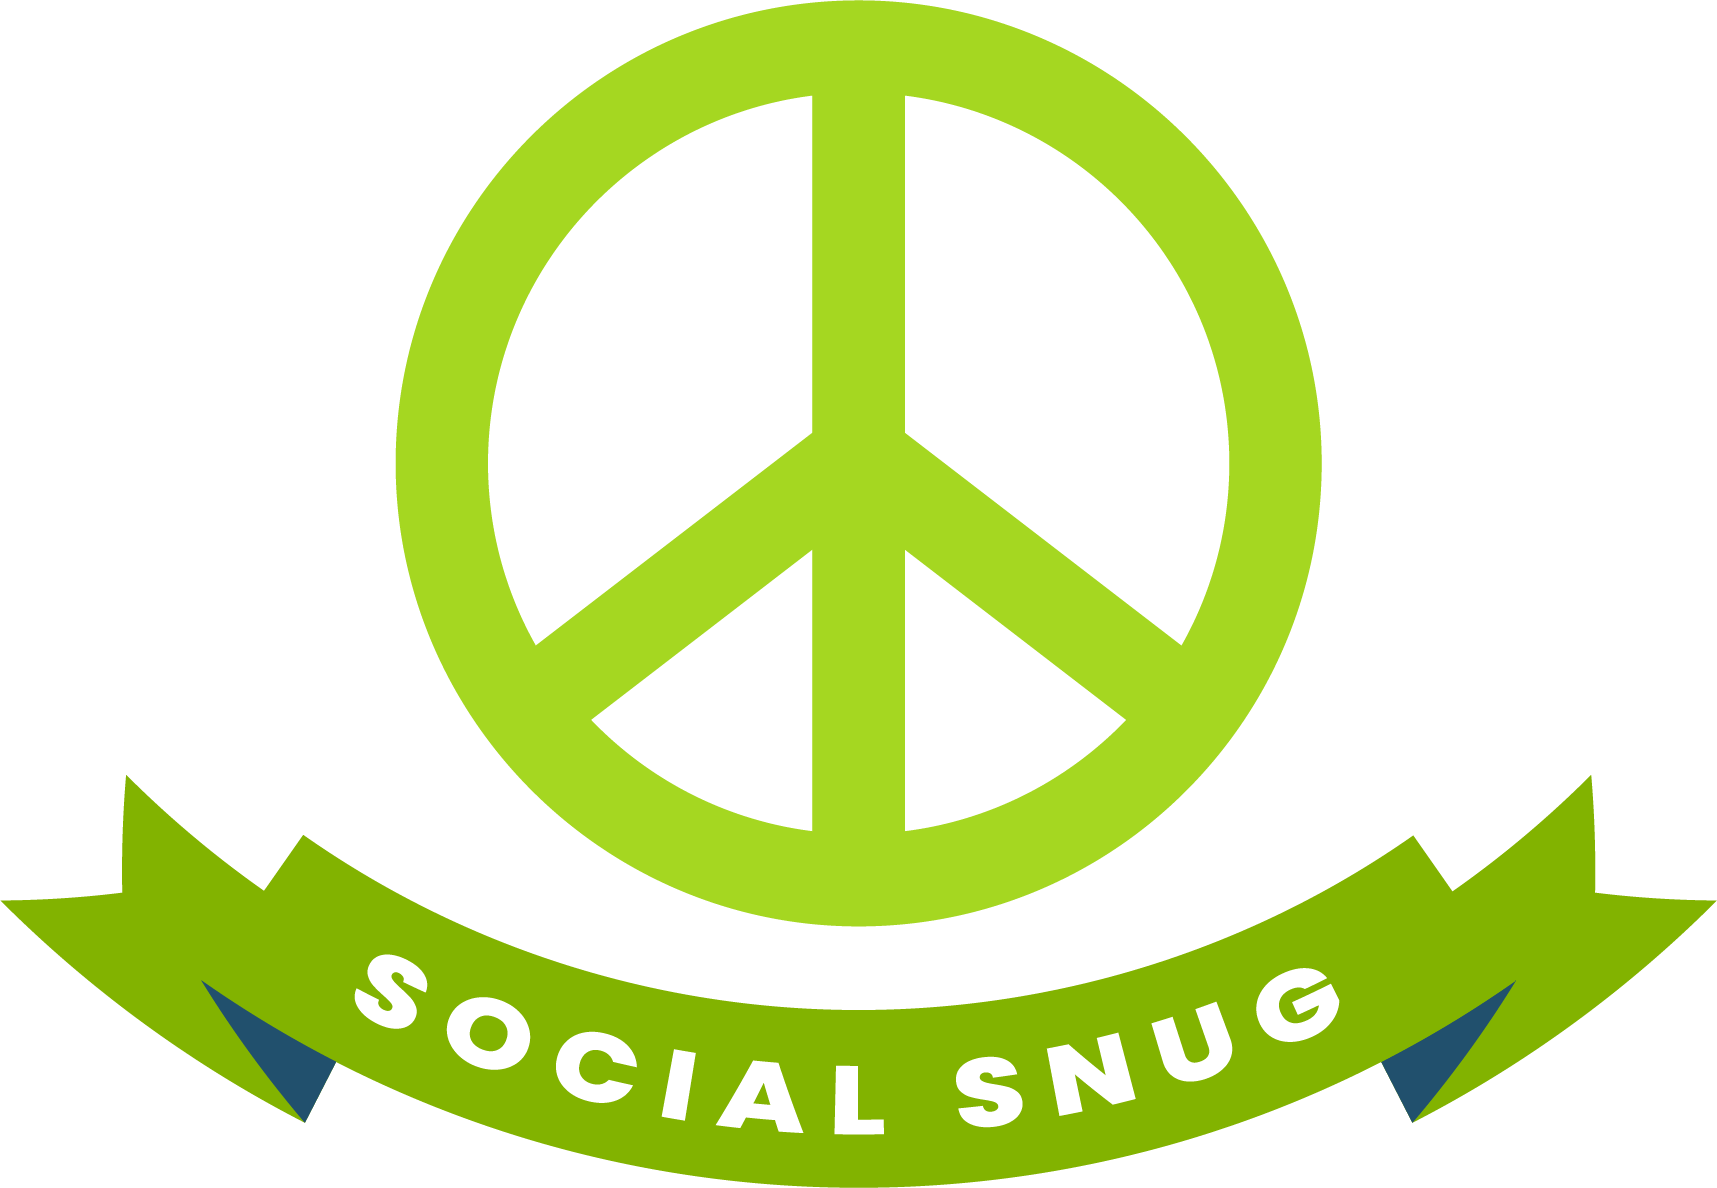 Social Snug Logo